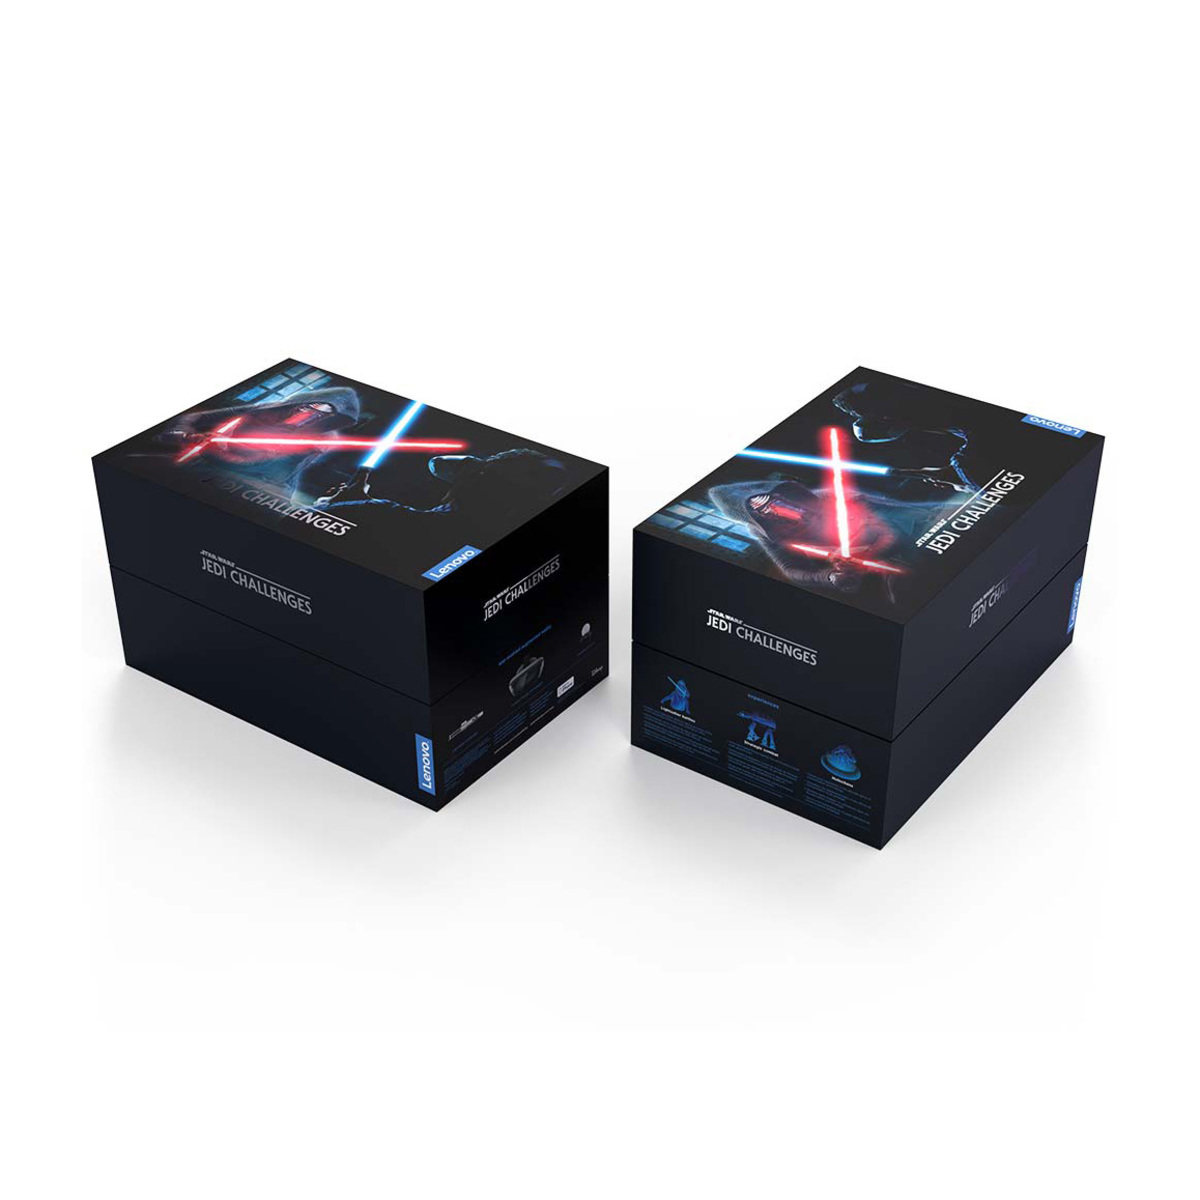 Lenovo Star Wars VR Headset Challenge boxed image on white background